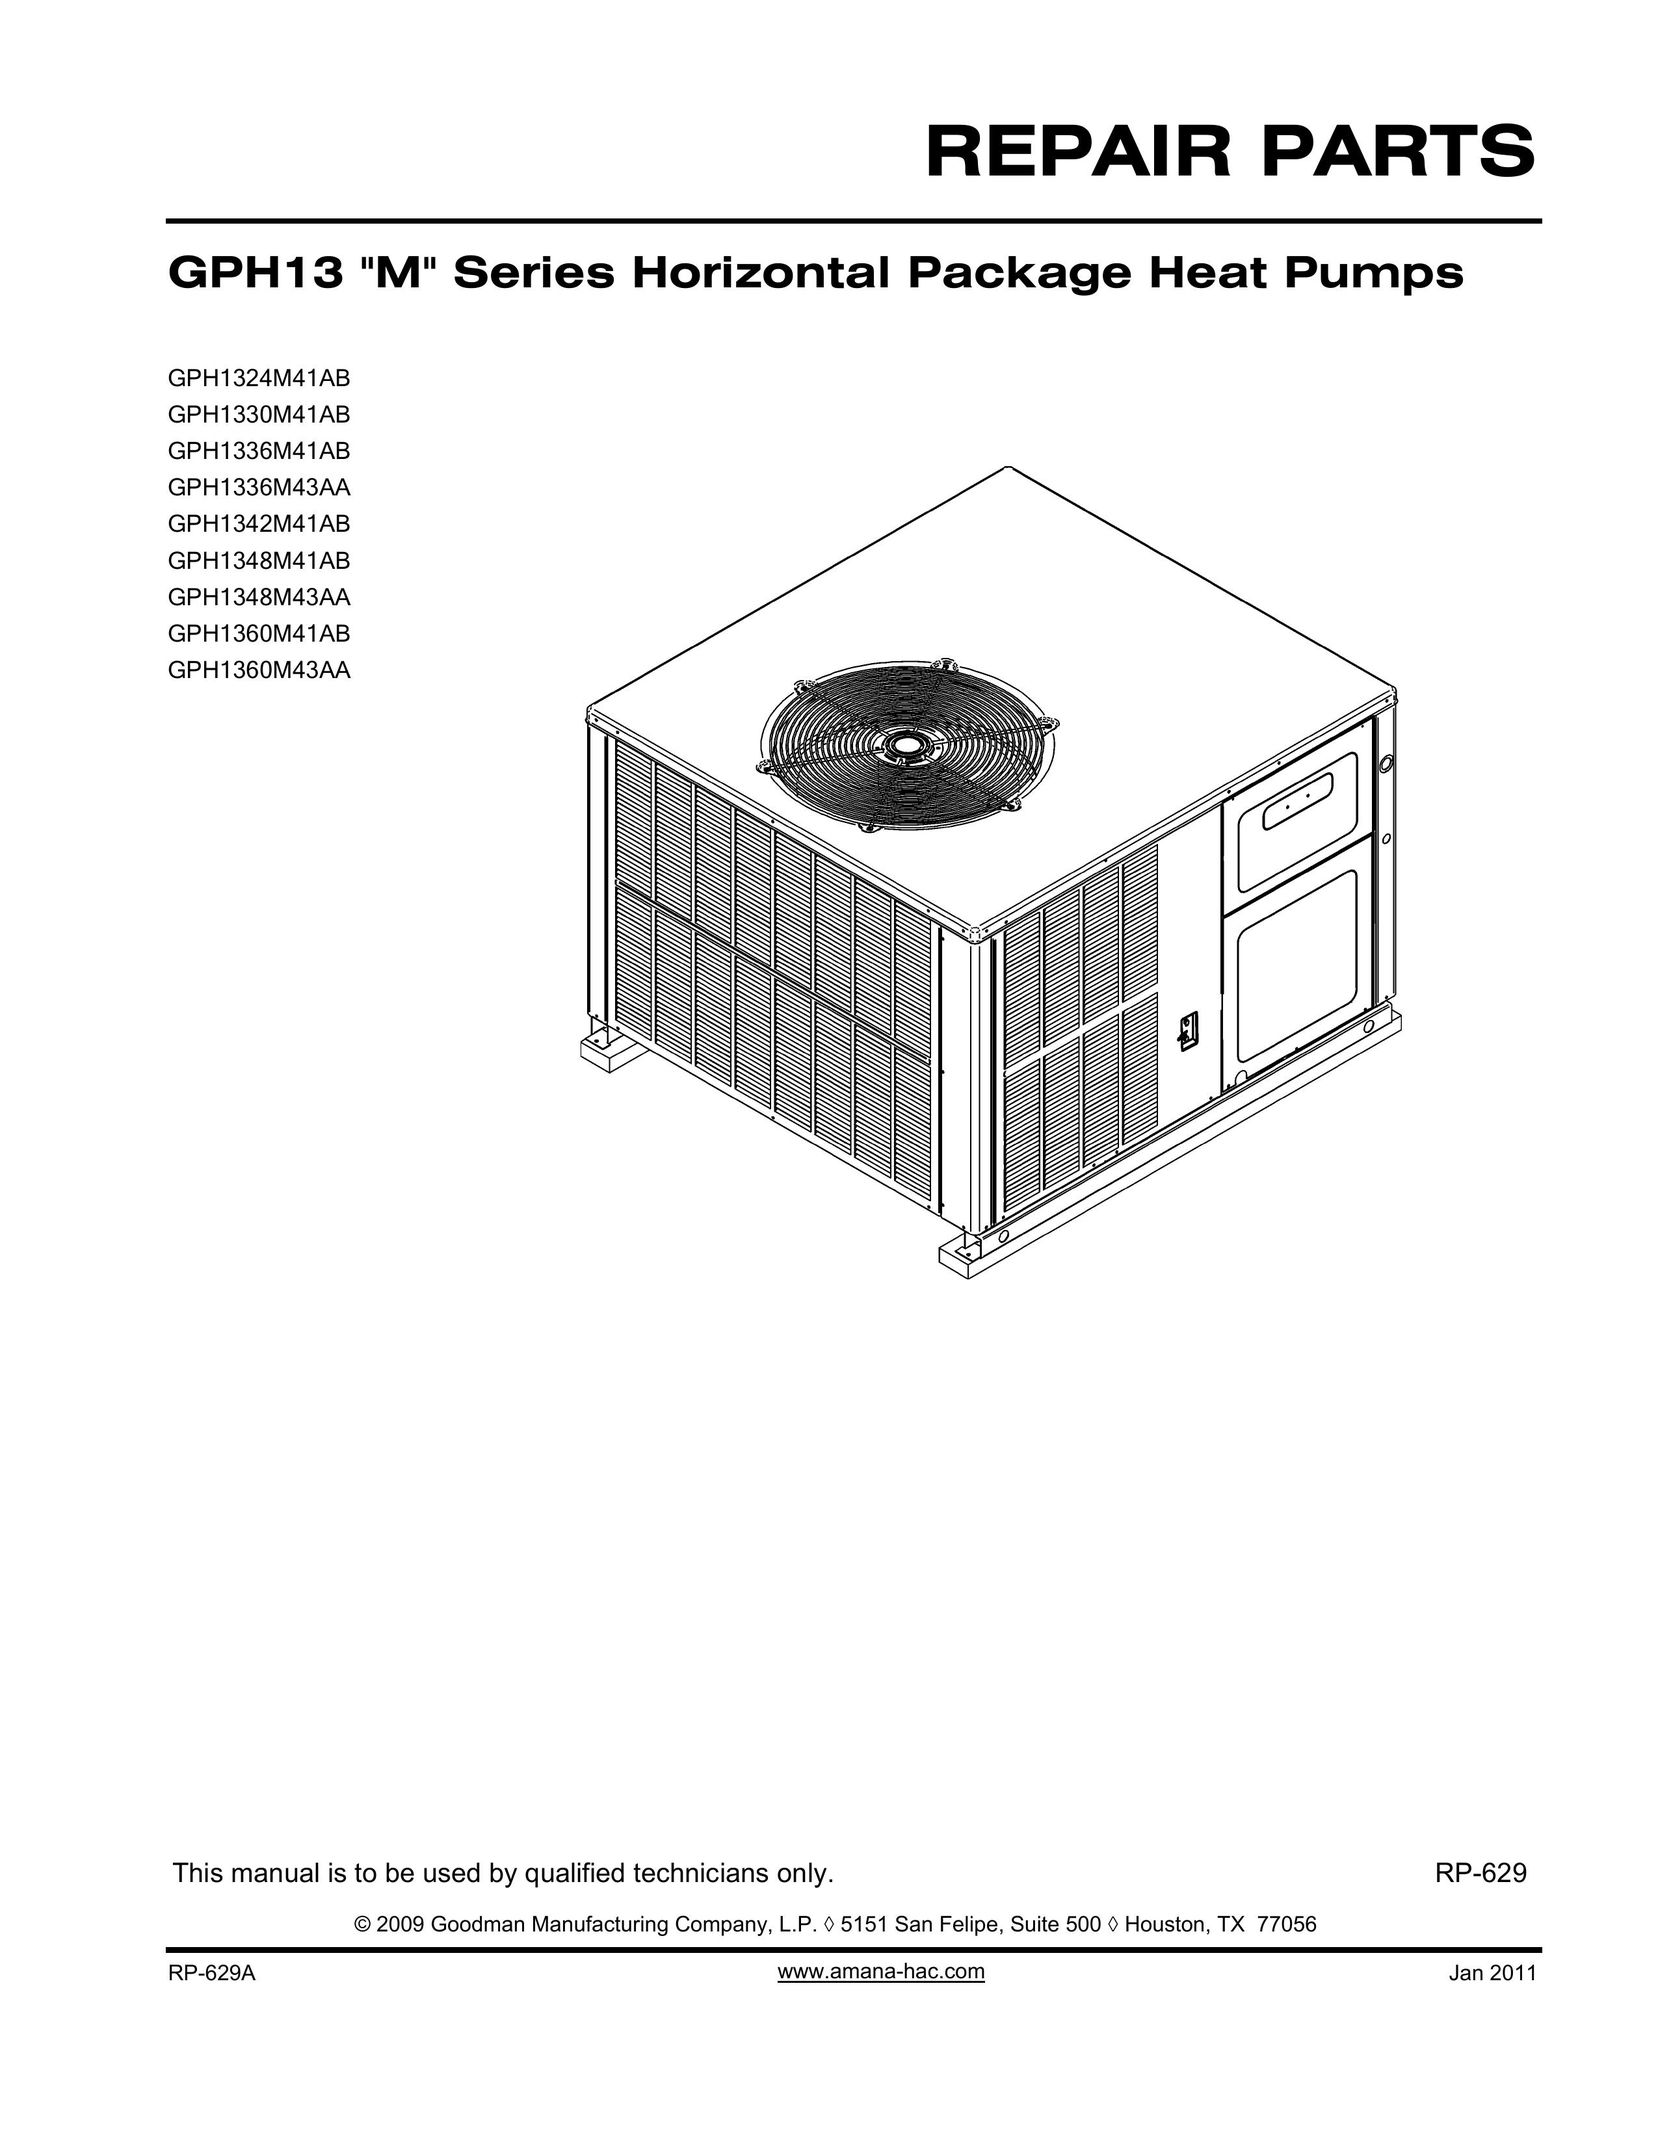 Goodman Mfg GPH1348M41AB Heat Pump User Manual